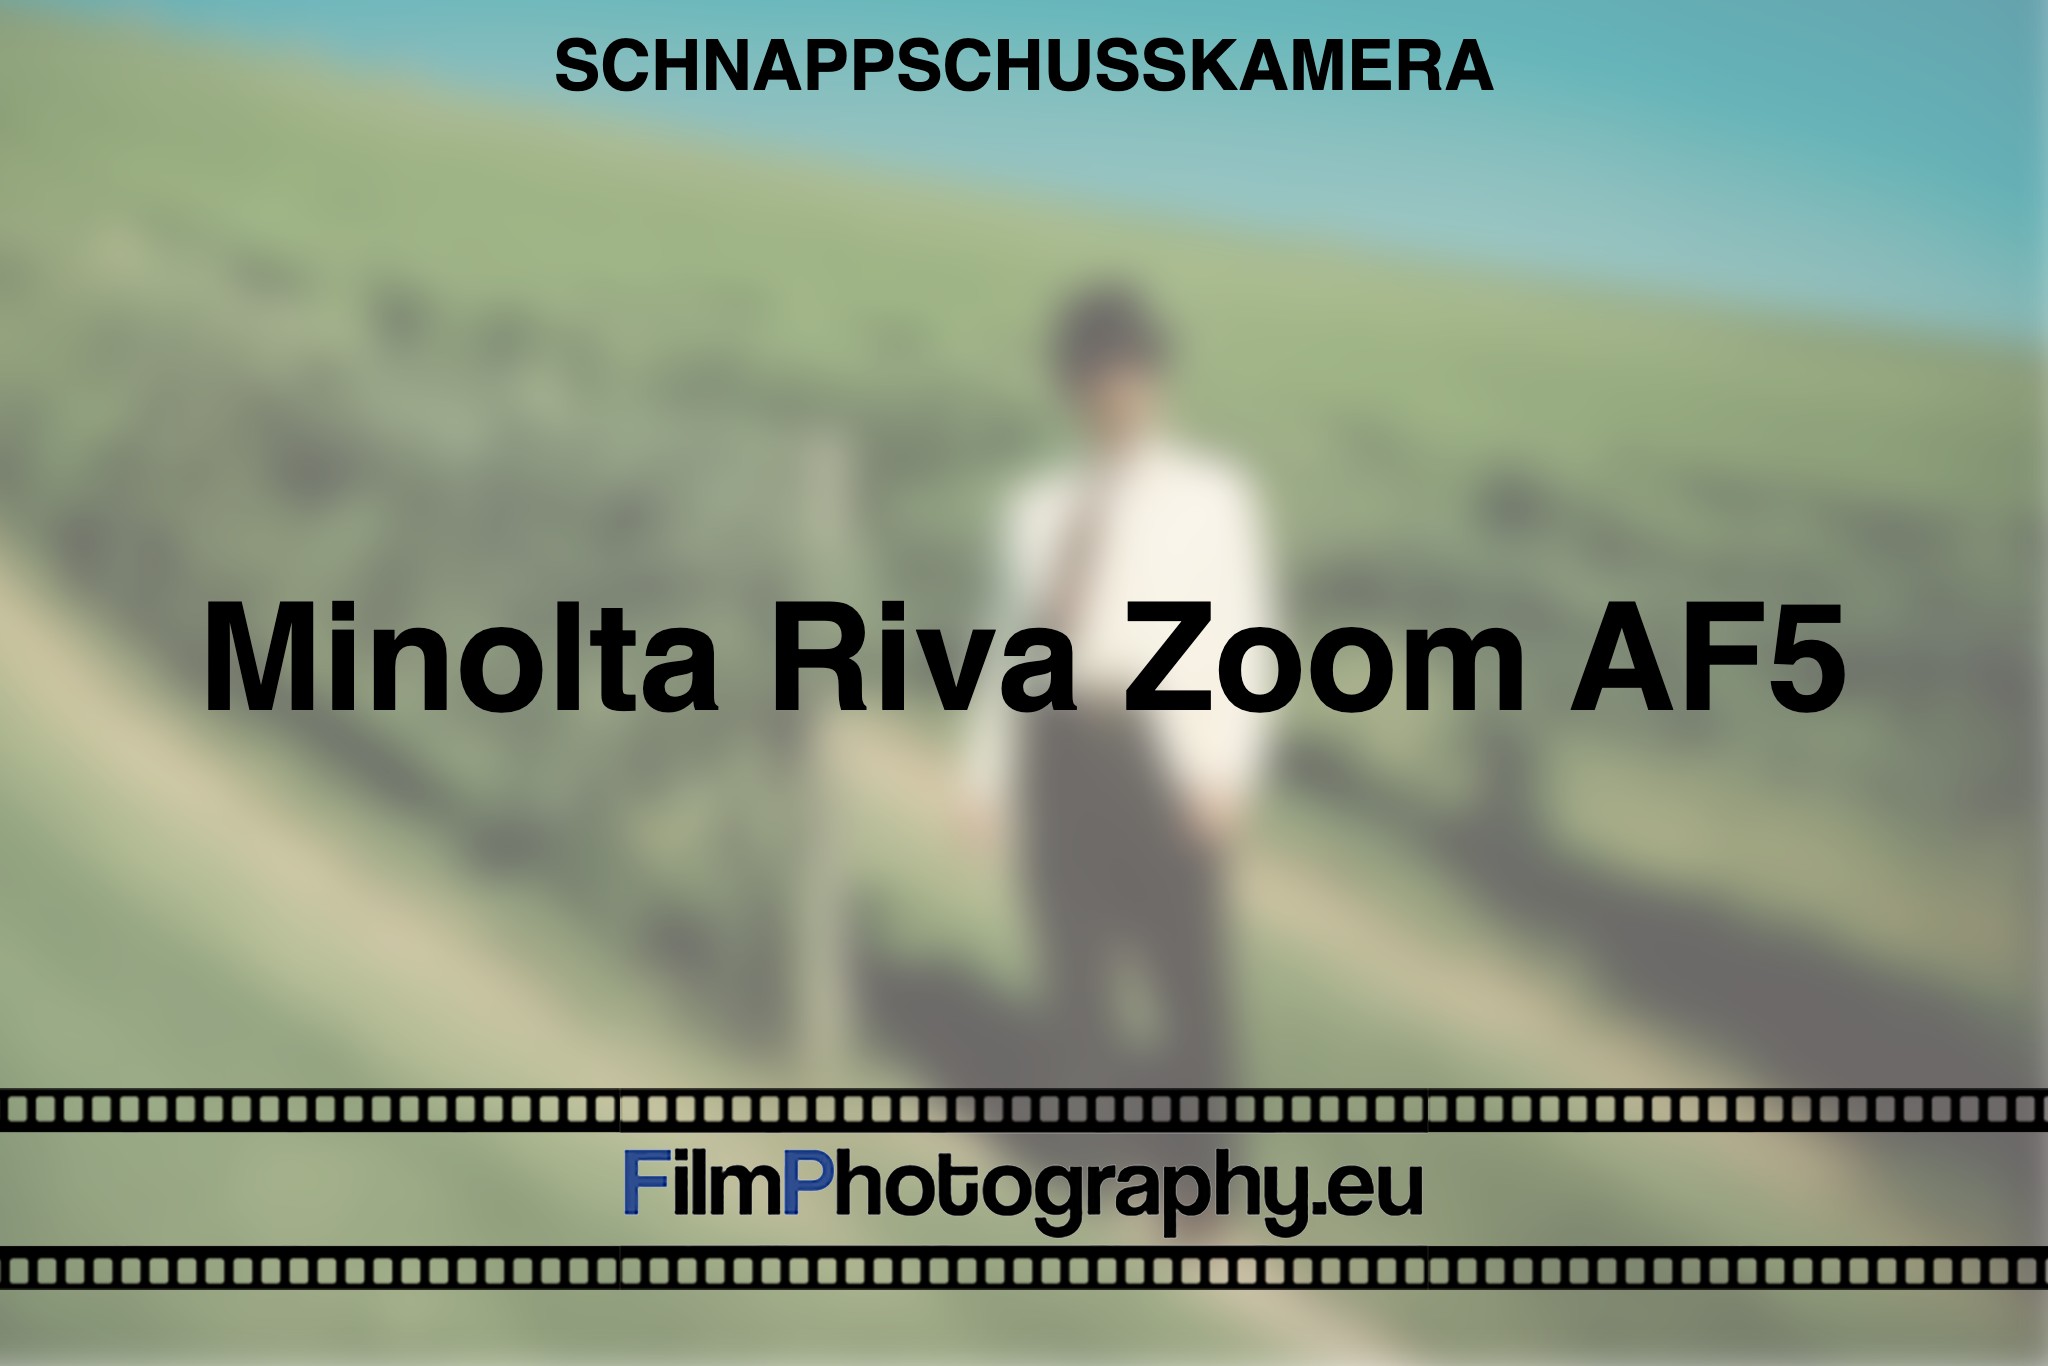 minolta-riva-zoom-af5-schnappschusskamera-bnv